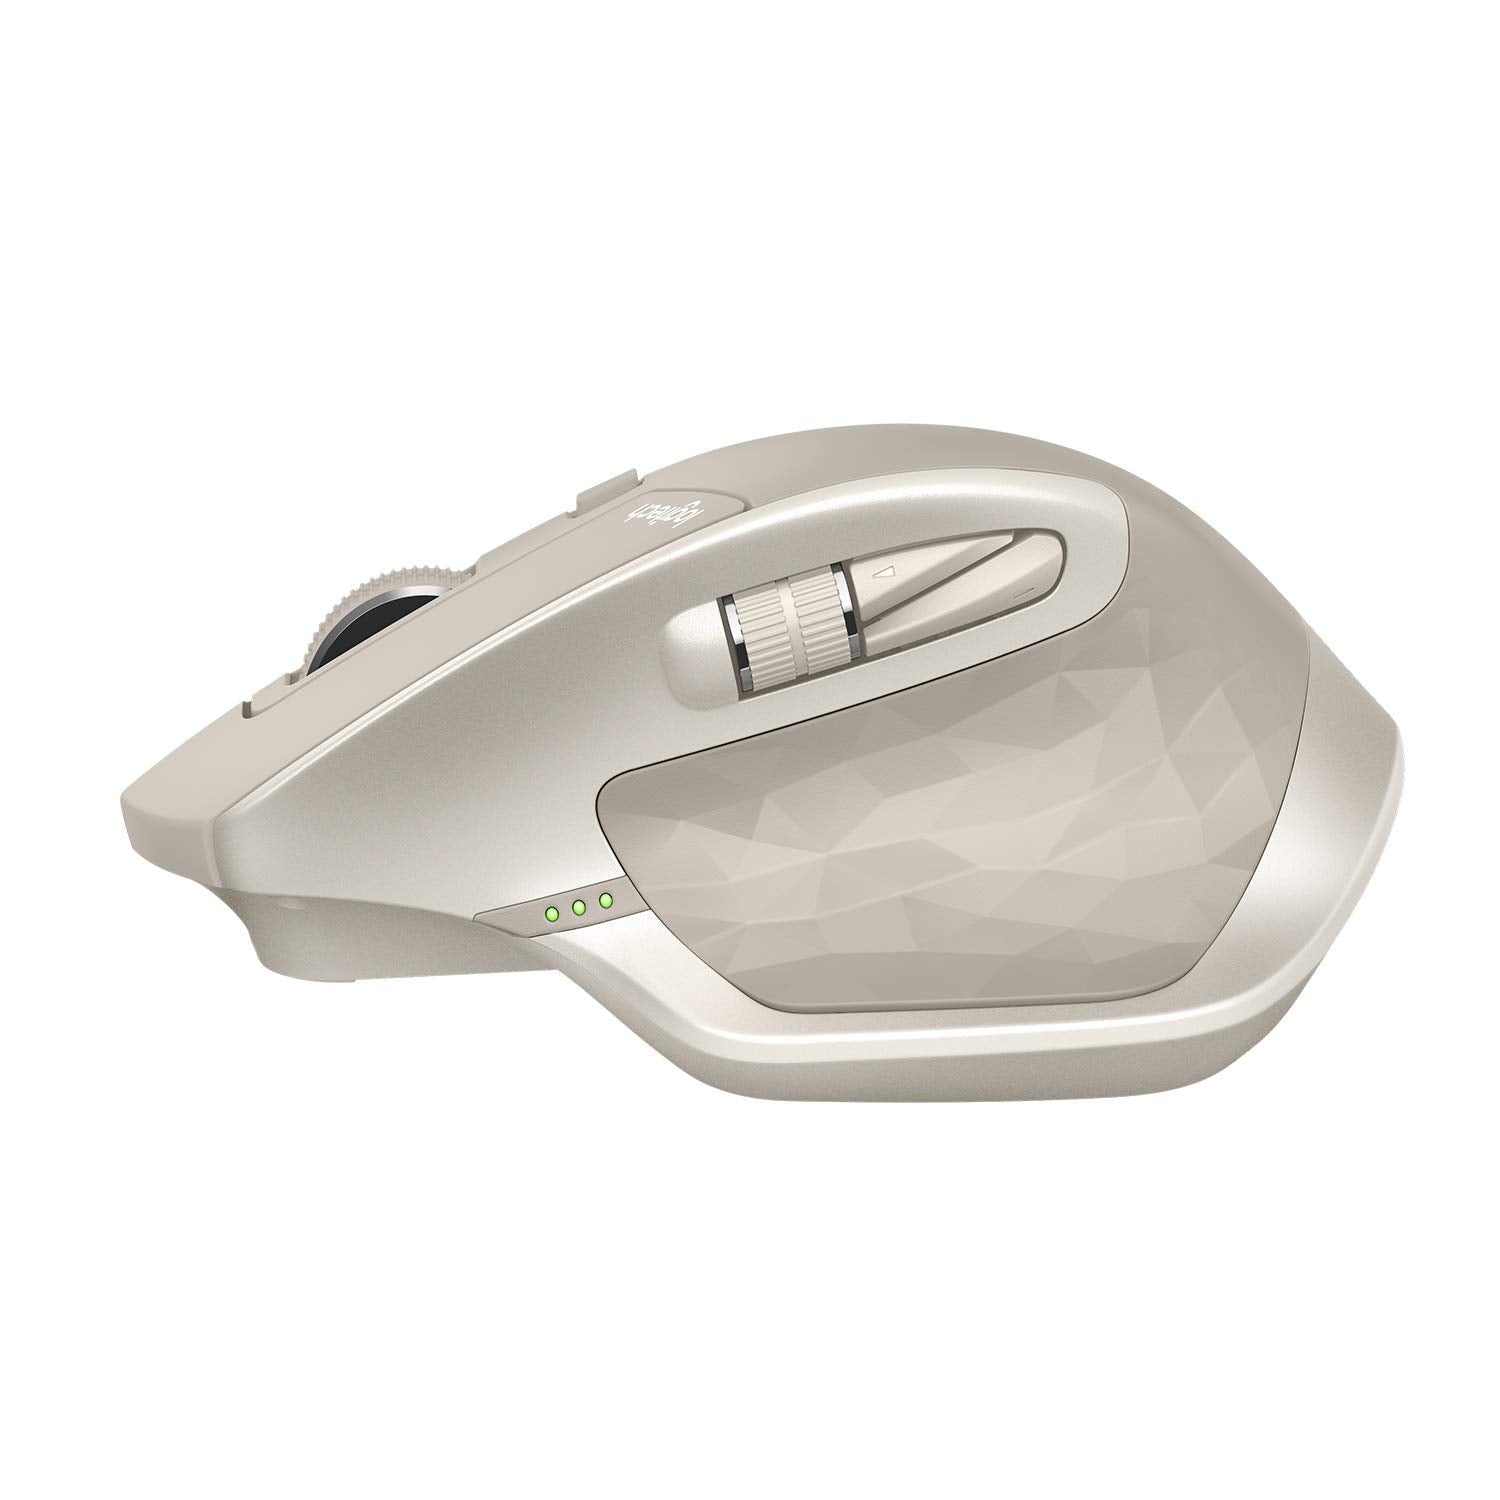 Logitech MX Master Wireless Mouse stone